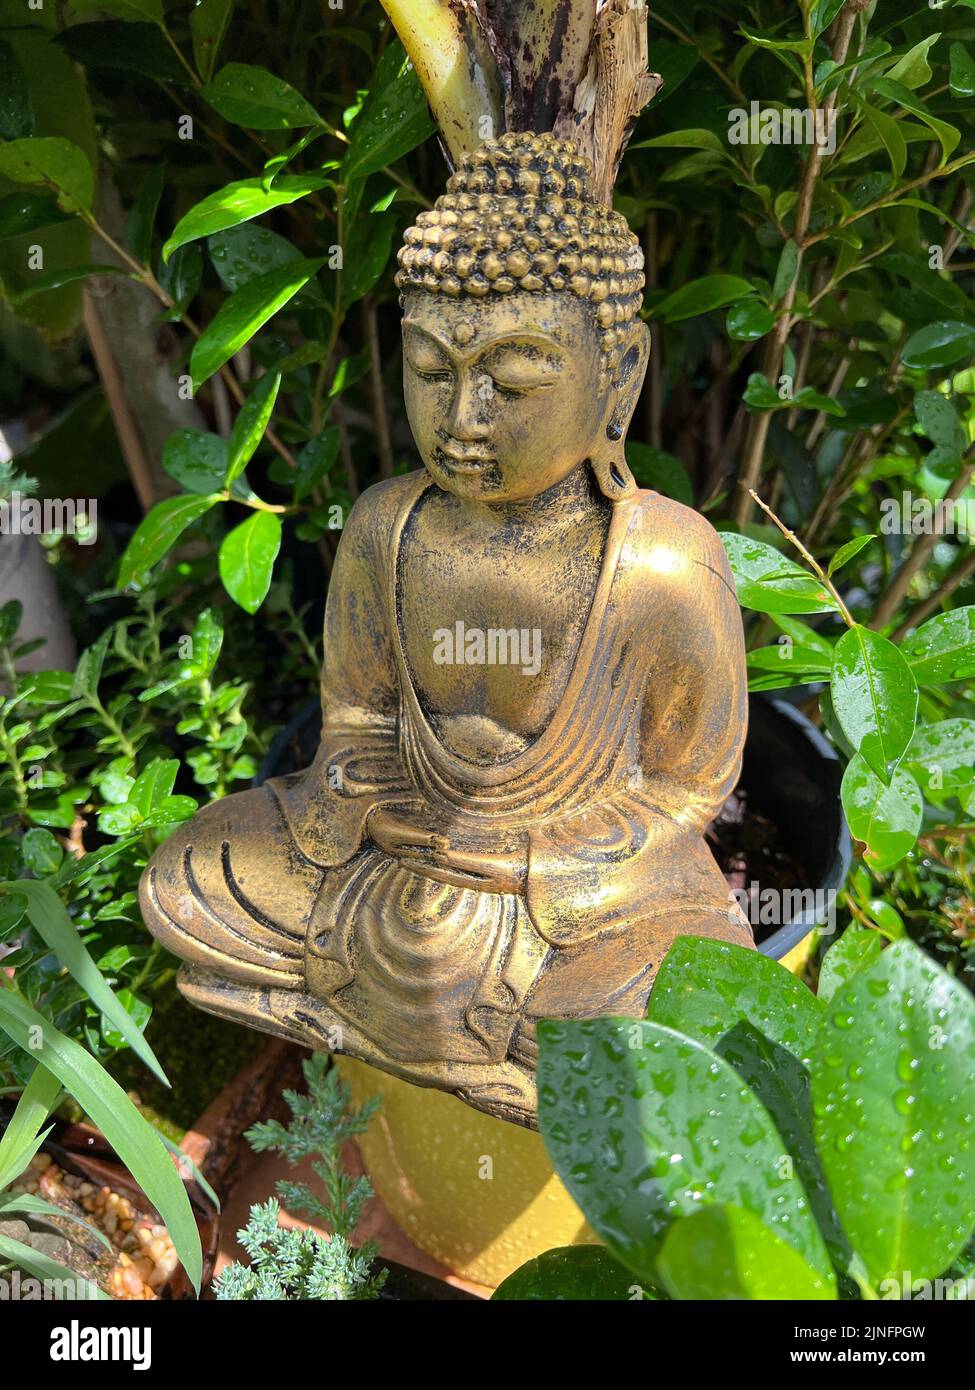 Sitting Buddha, outdoors among the plants, Brooklyn, New York. Stock Photo